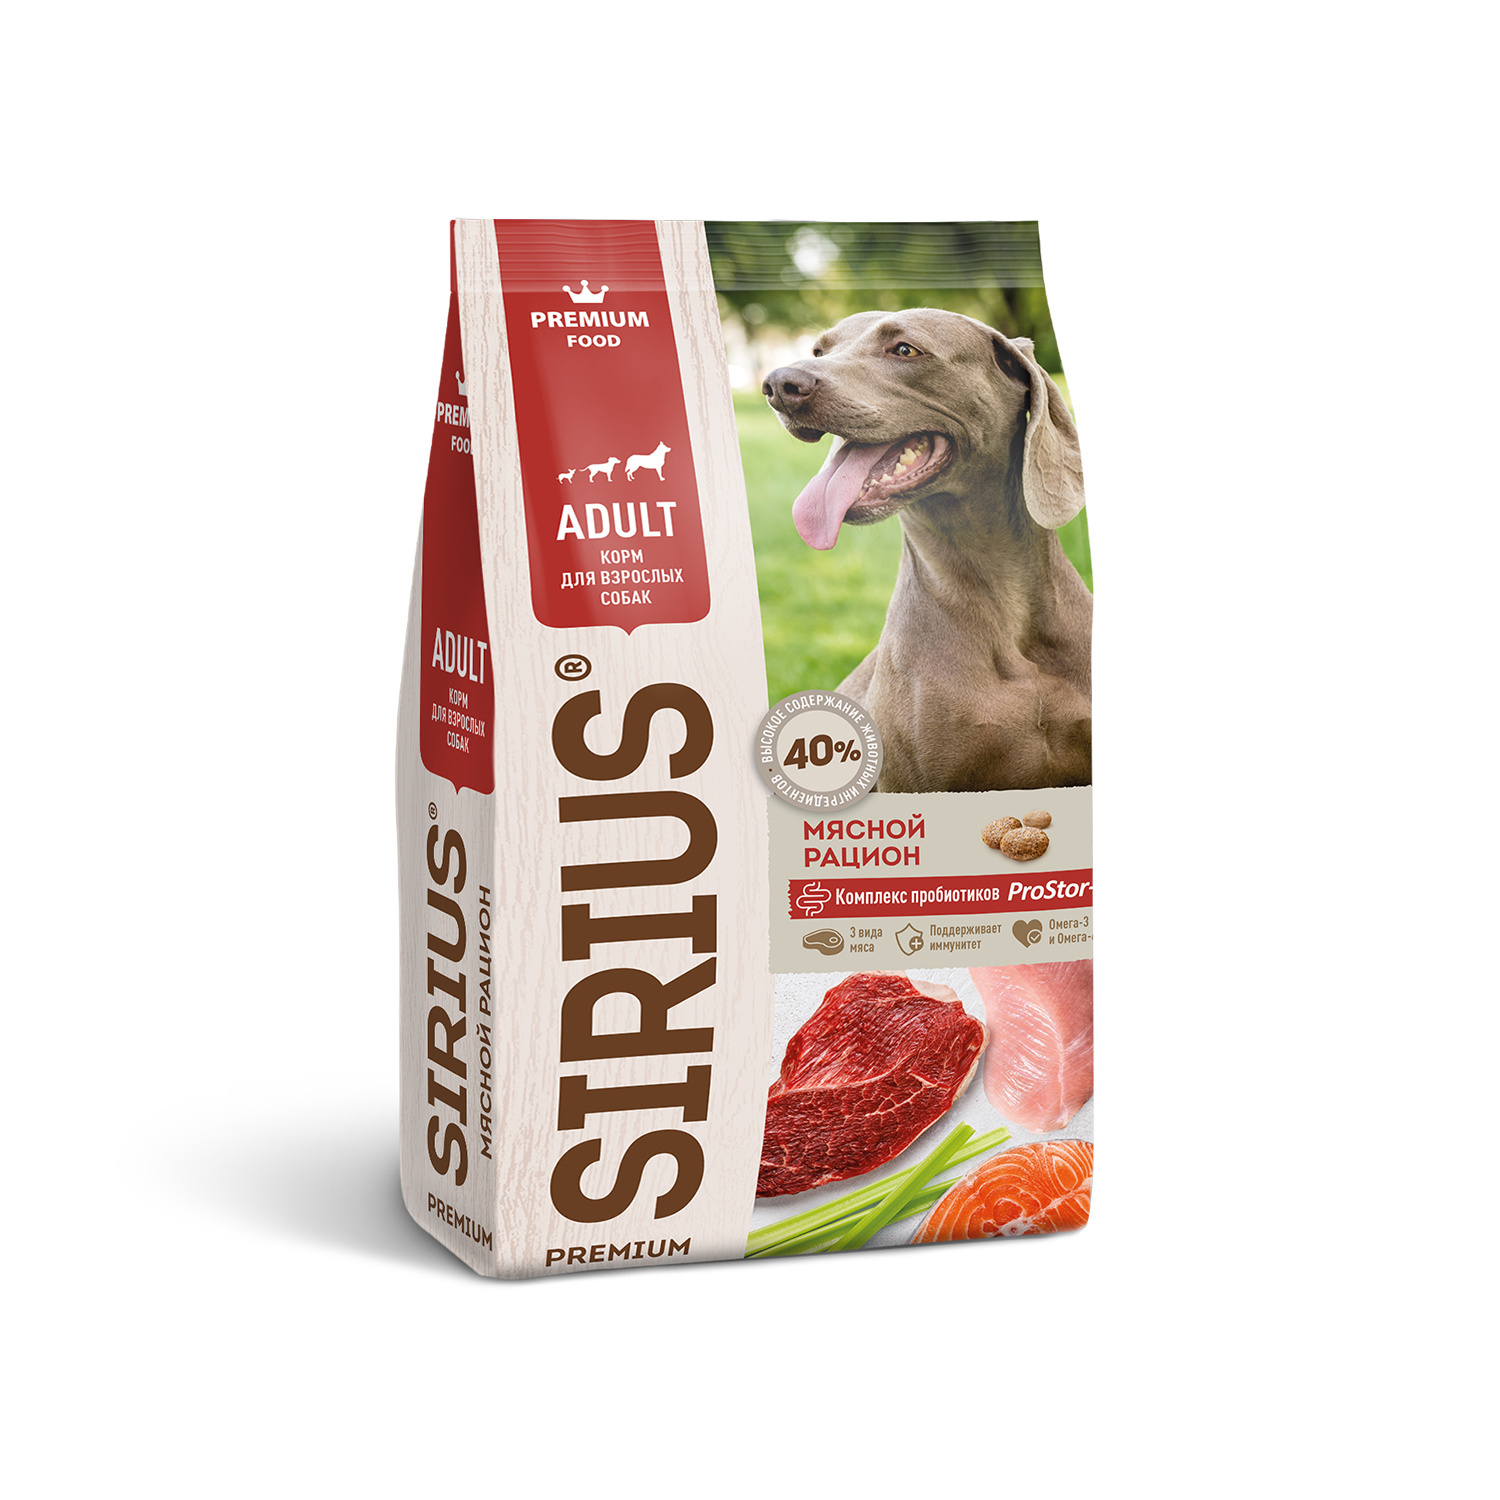 Sirius Sirius сухой корм для собак, мясной рацион (15 кг) 60051